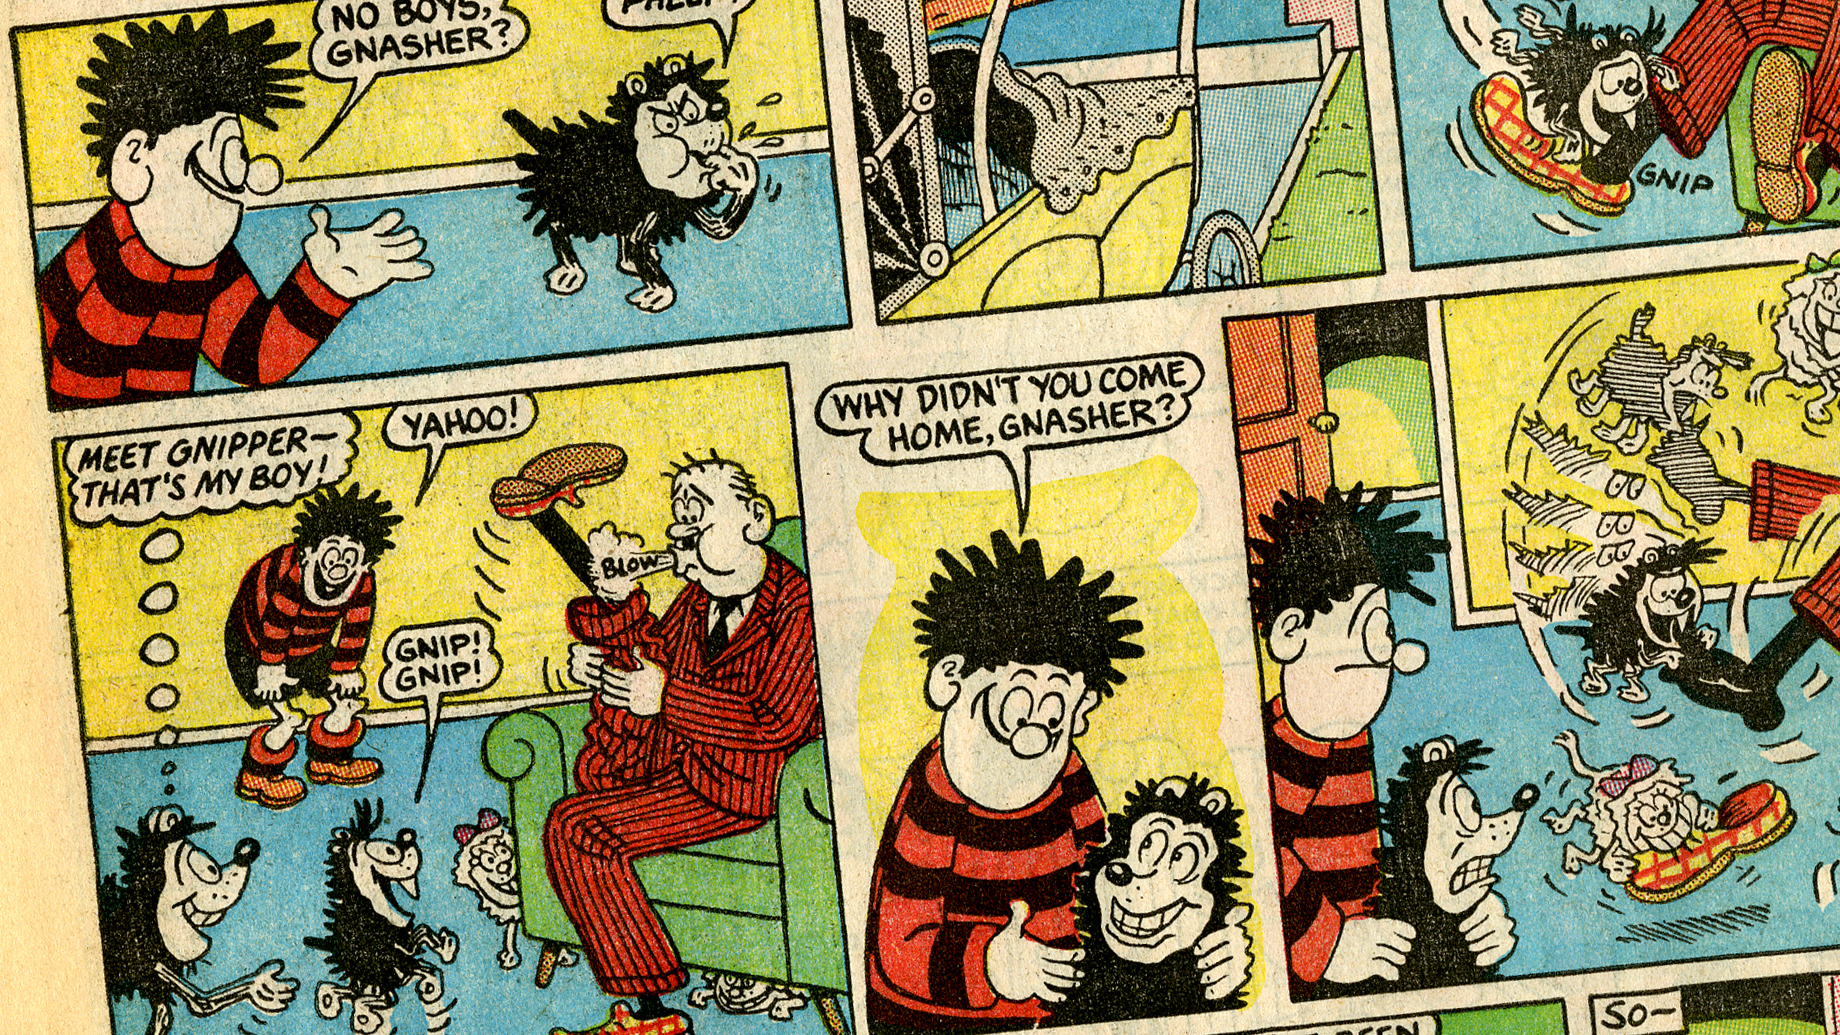 Gnipper's first comic strip appearance